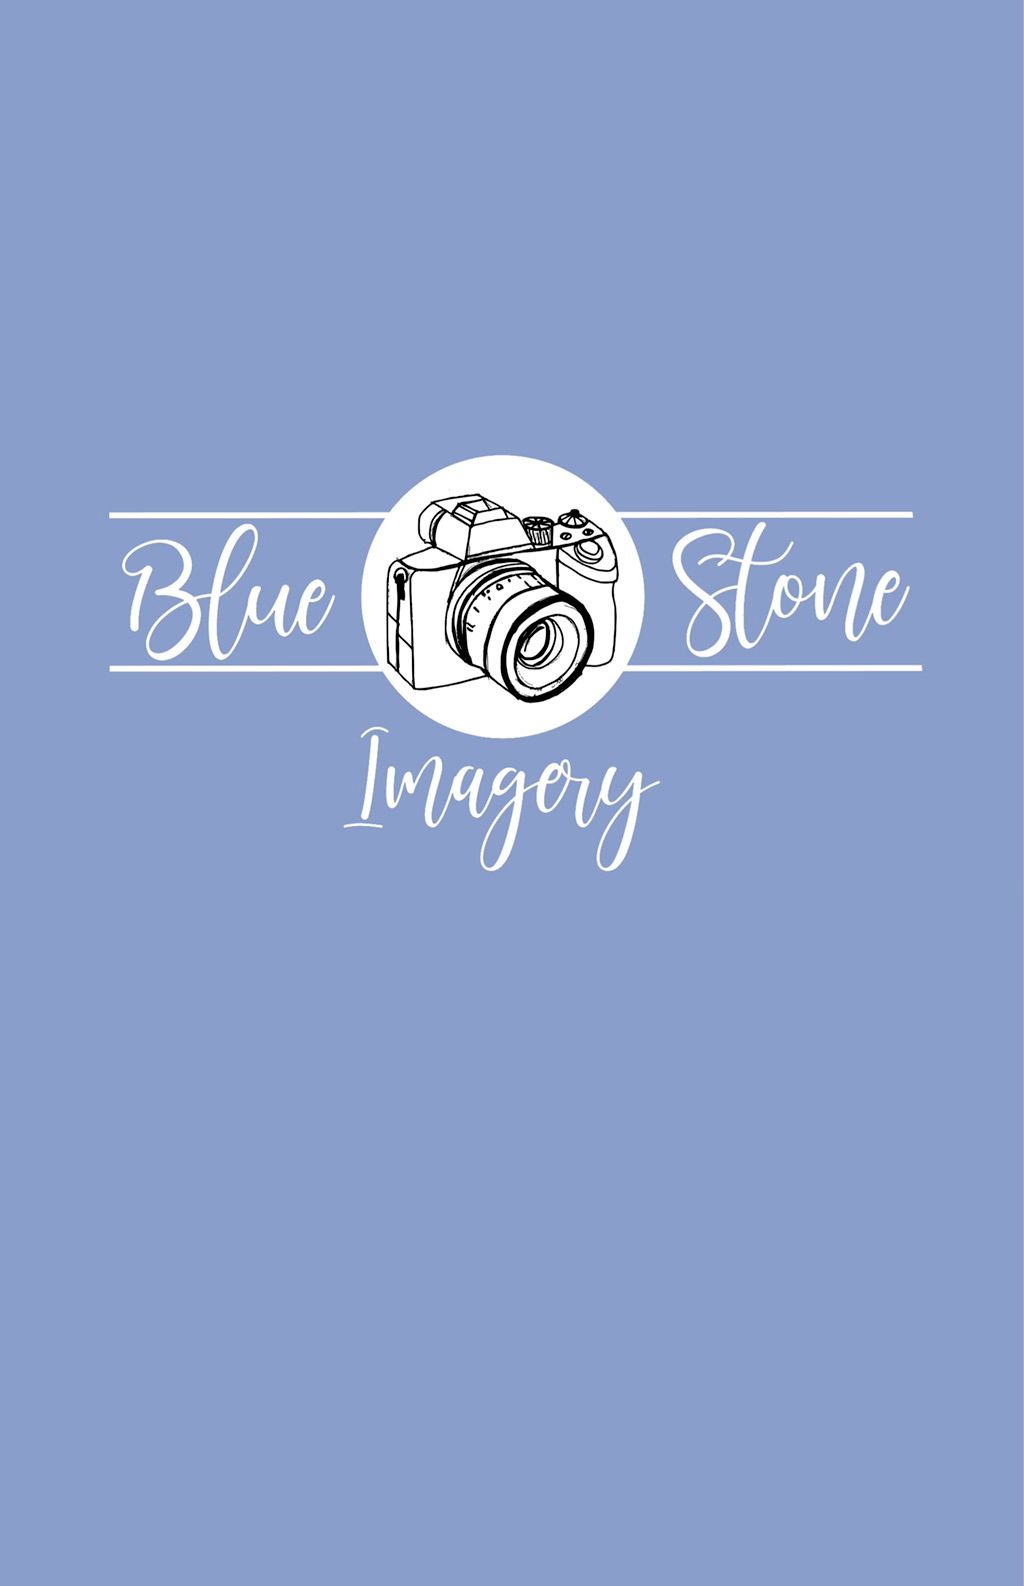 Blue Stone Imagery LLC